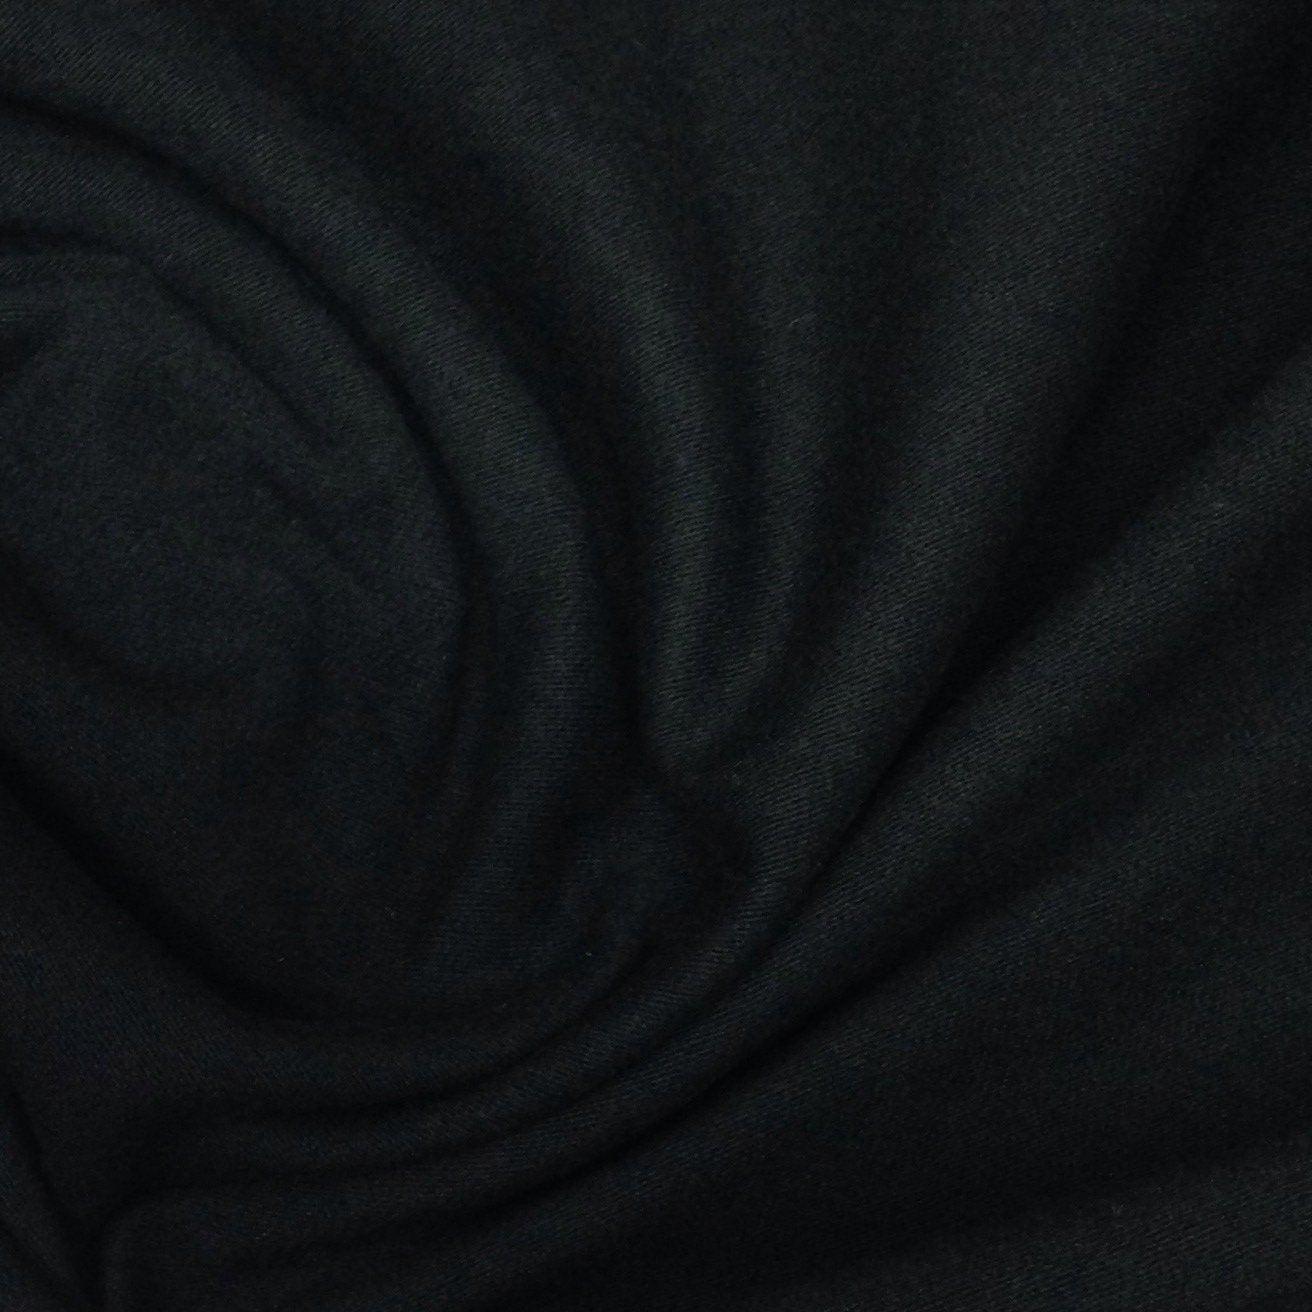 Black Organic Cotton/Spandex Jersey Fabric - 200 GSM - Grown in the USA - Nature's Fabrics